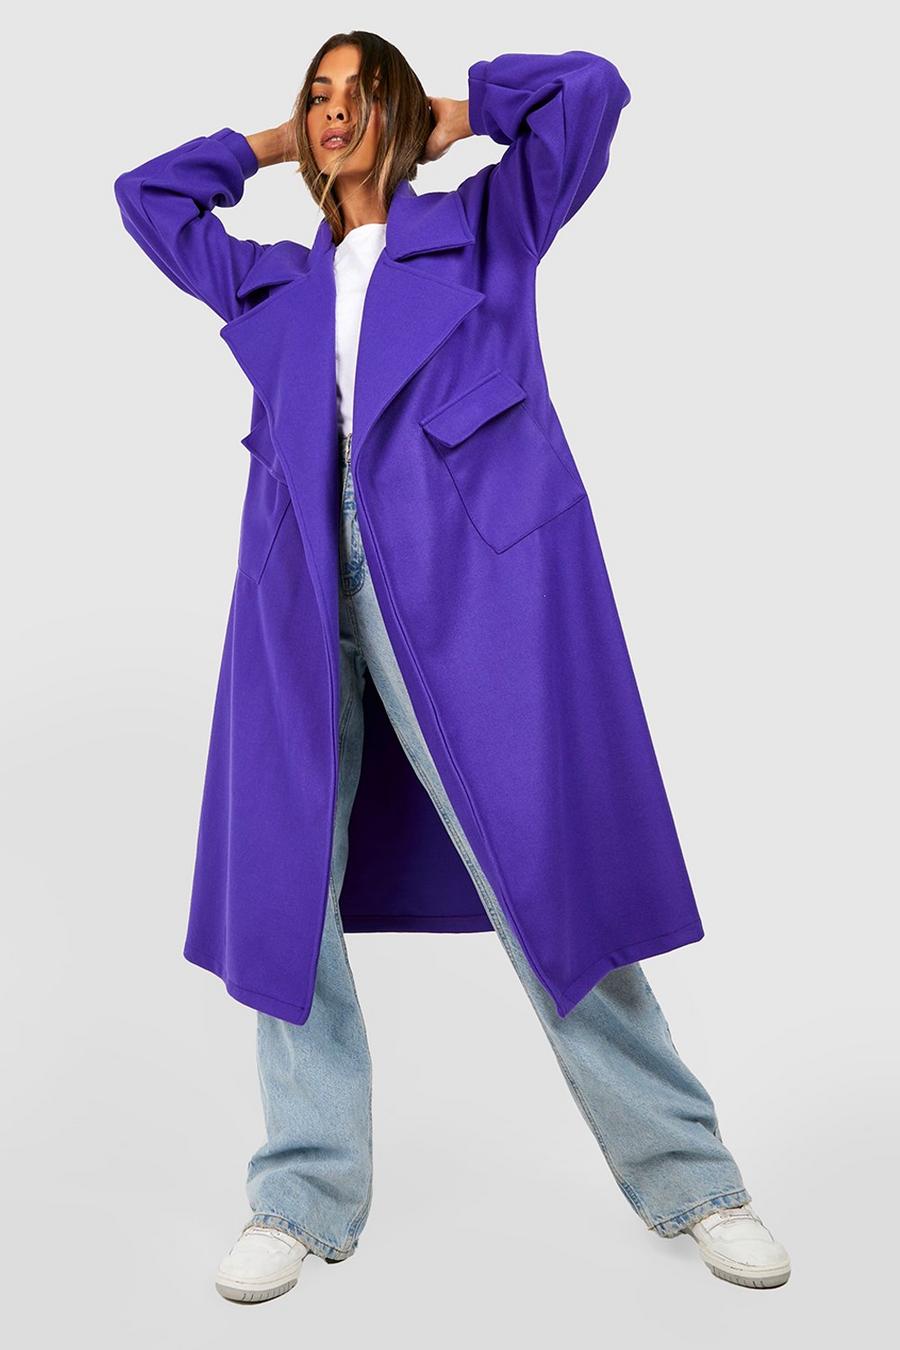 Jewel purple Wool Look Super Oversized Maxi Coat image number 1